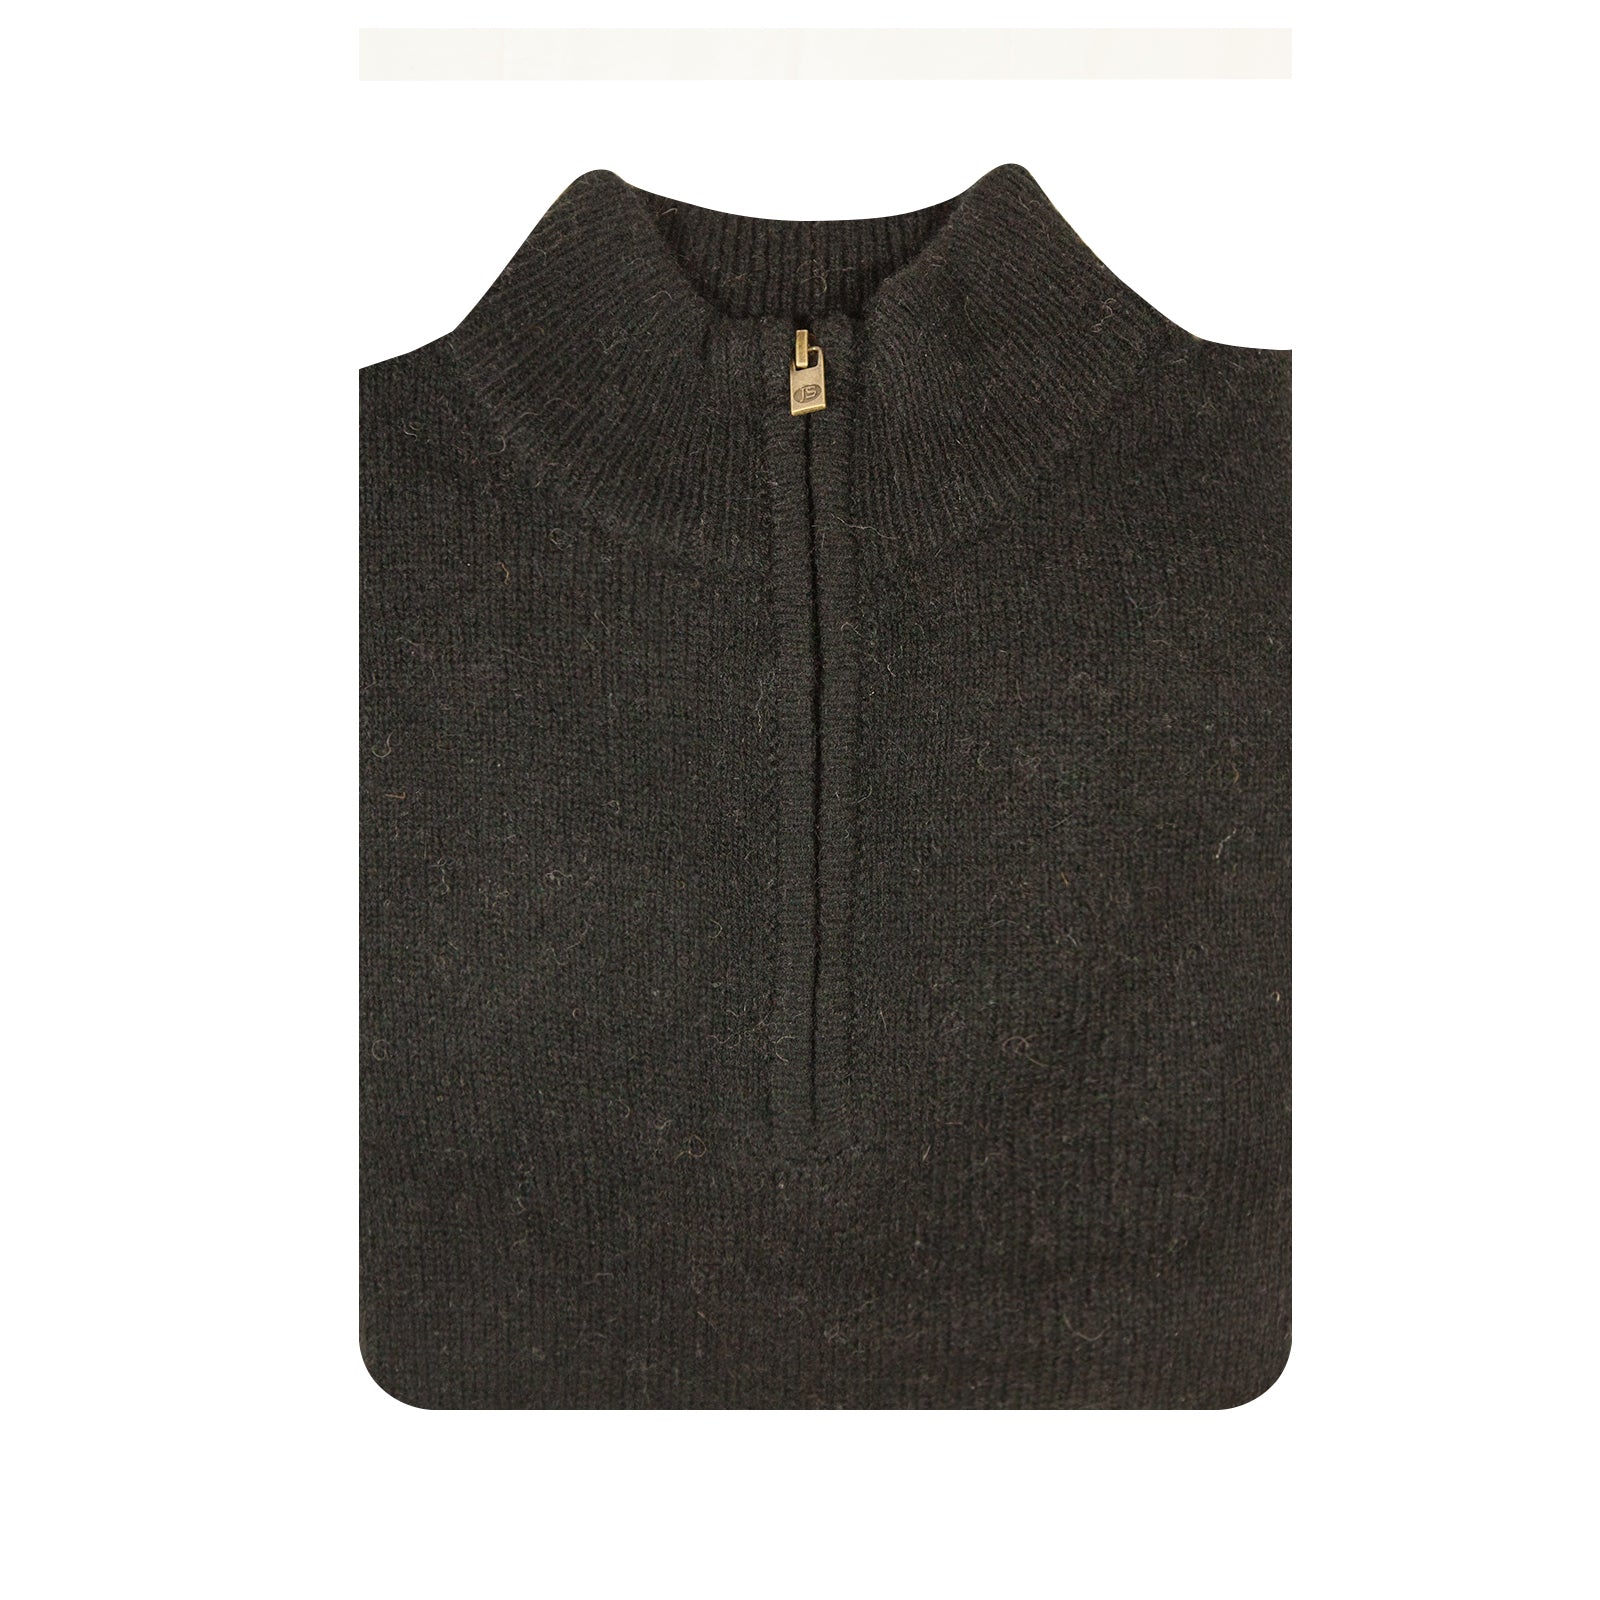 100% SHETLAND WOOL Half Zip Up Knit JUMPER Pullover Mens Sweater Knitted - Plain Black - L